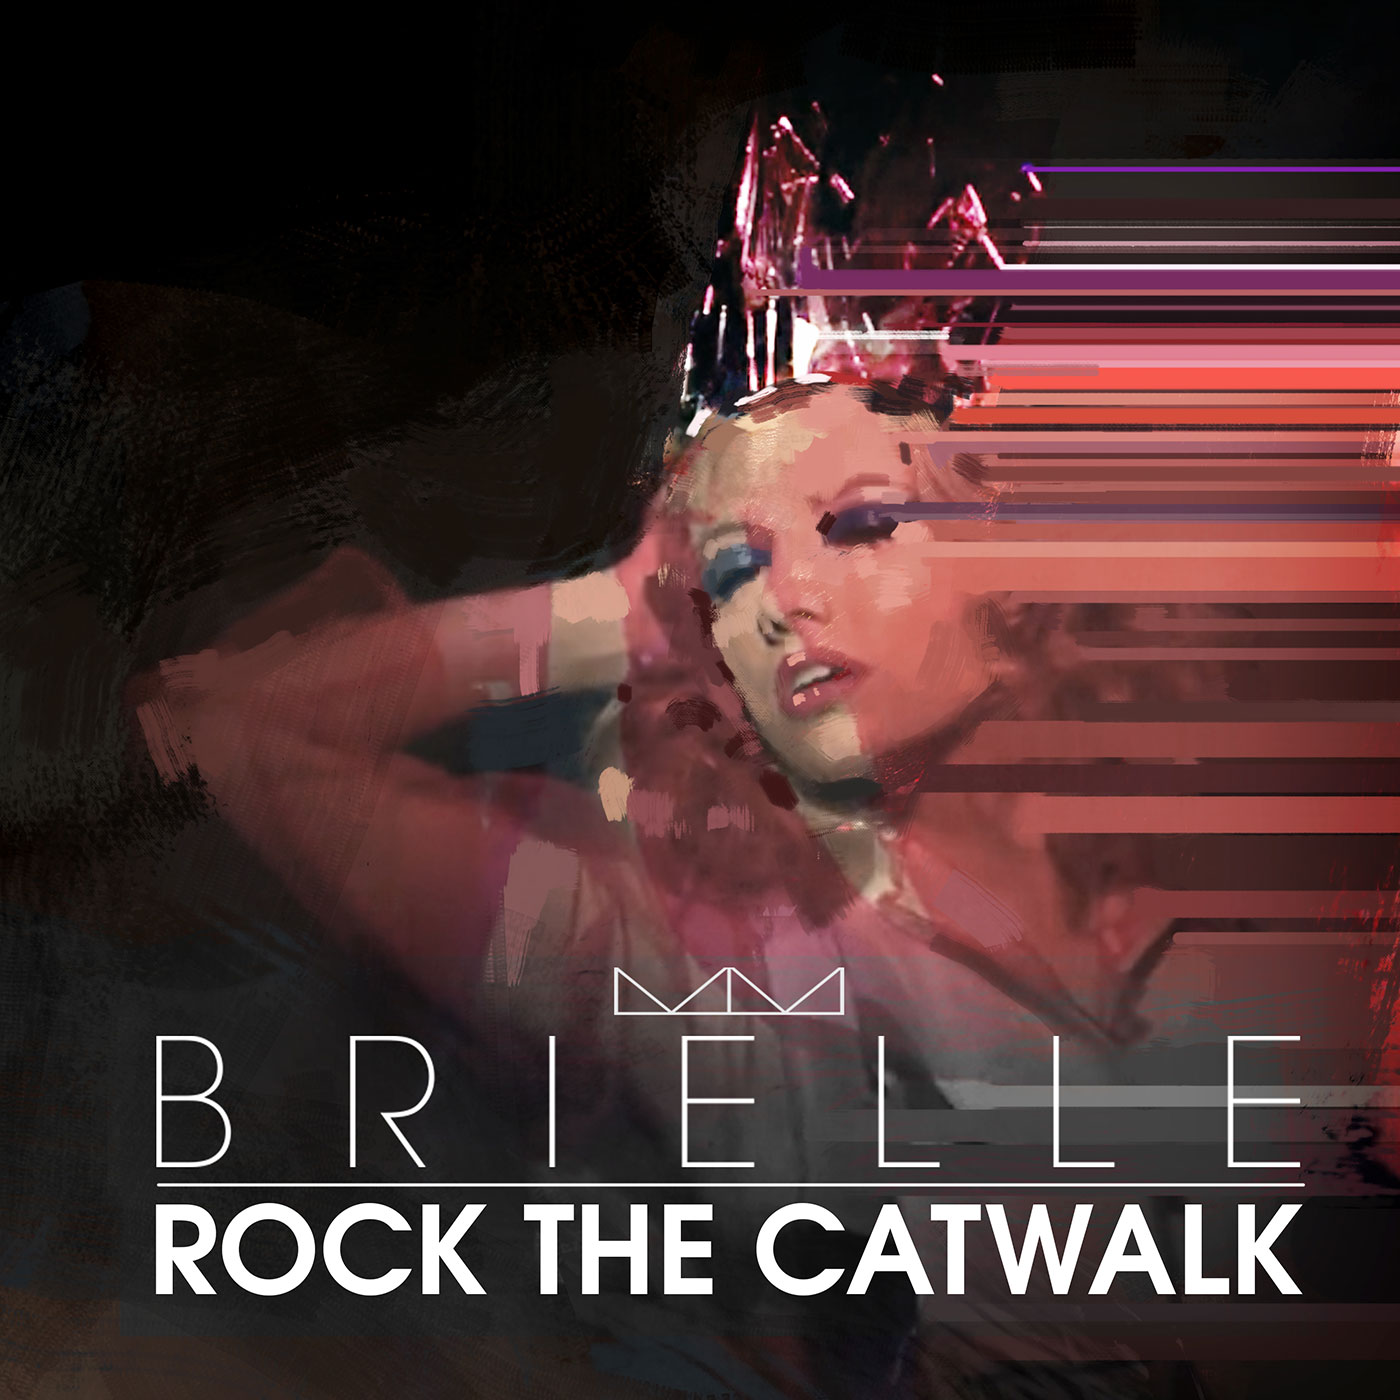 Rock The Catwalk